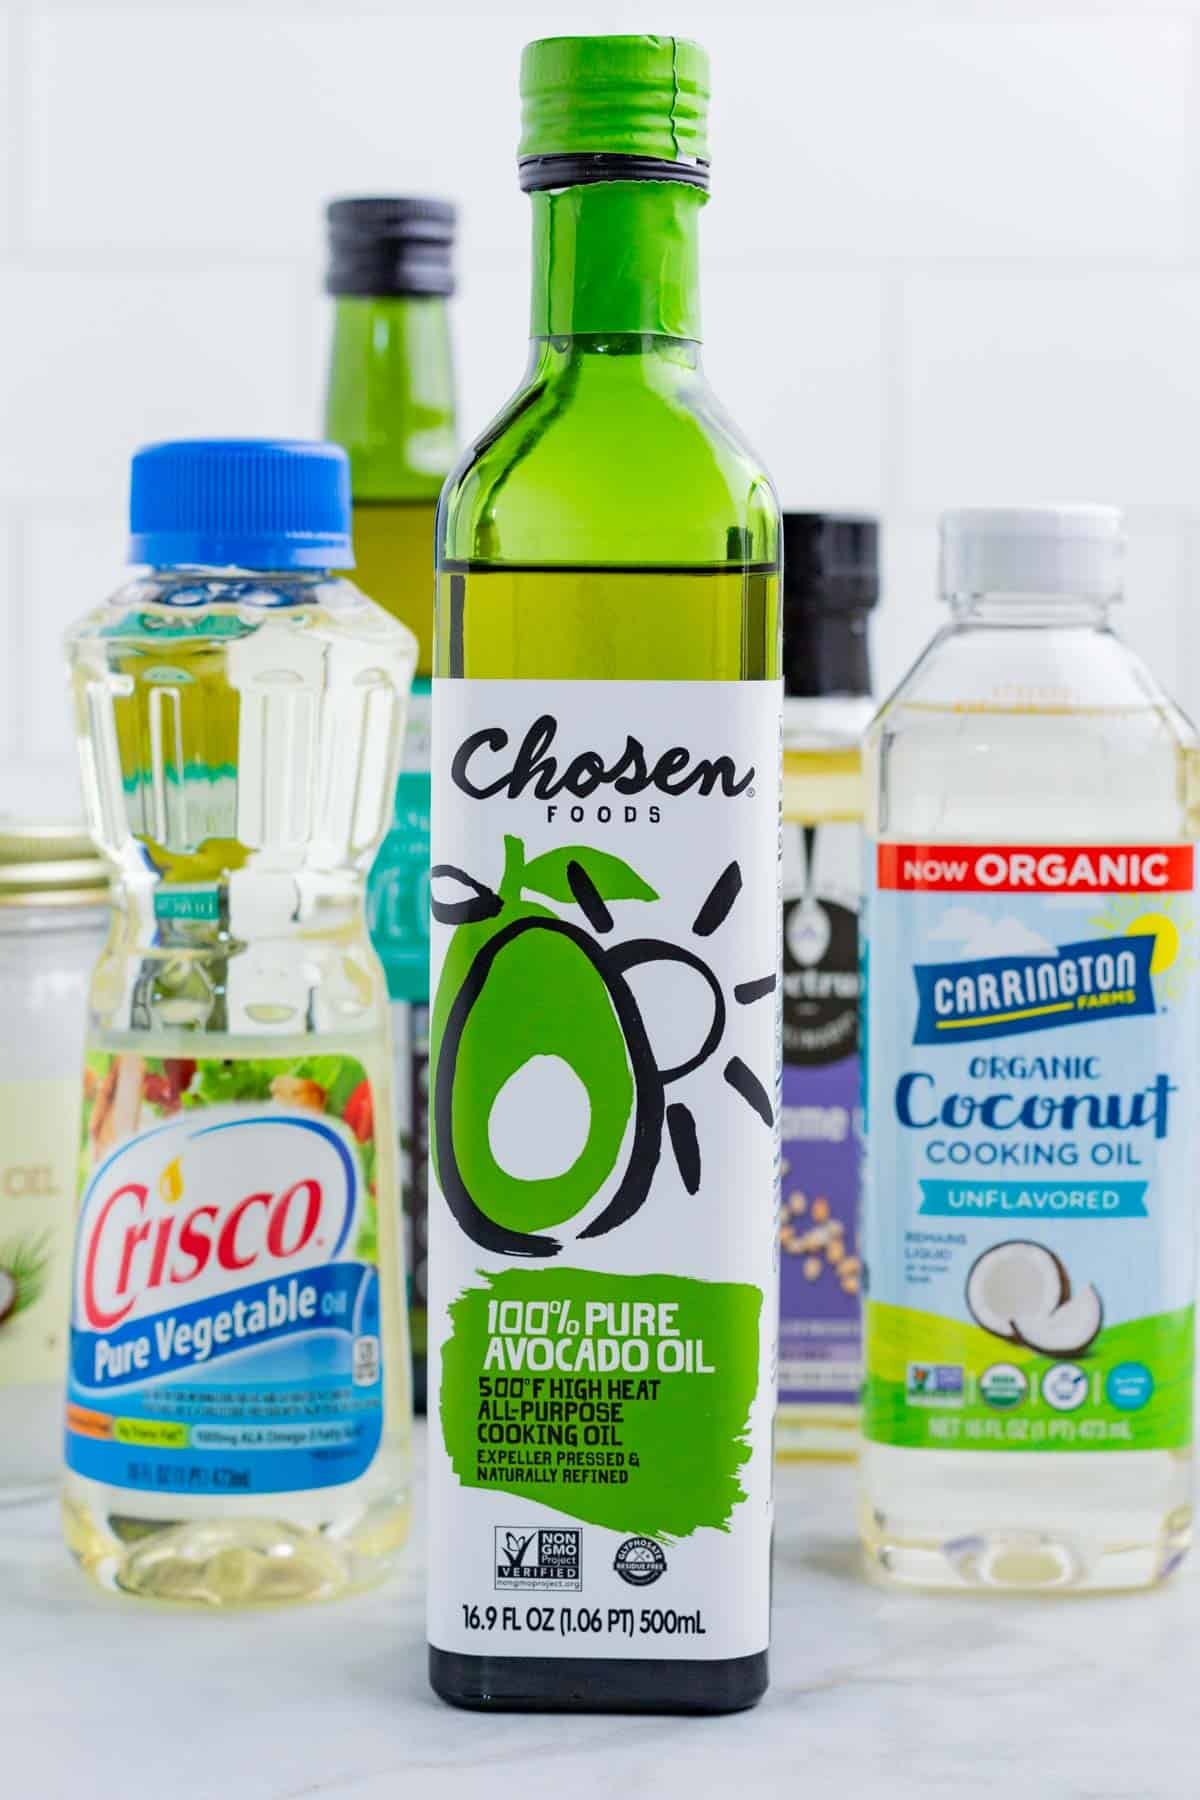 Oils in their original containers like avocado oil, Crisco oil, etc.